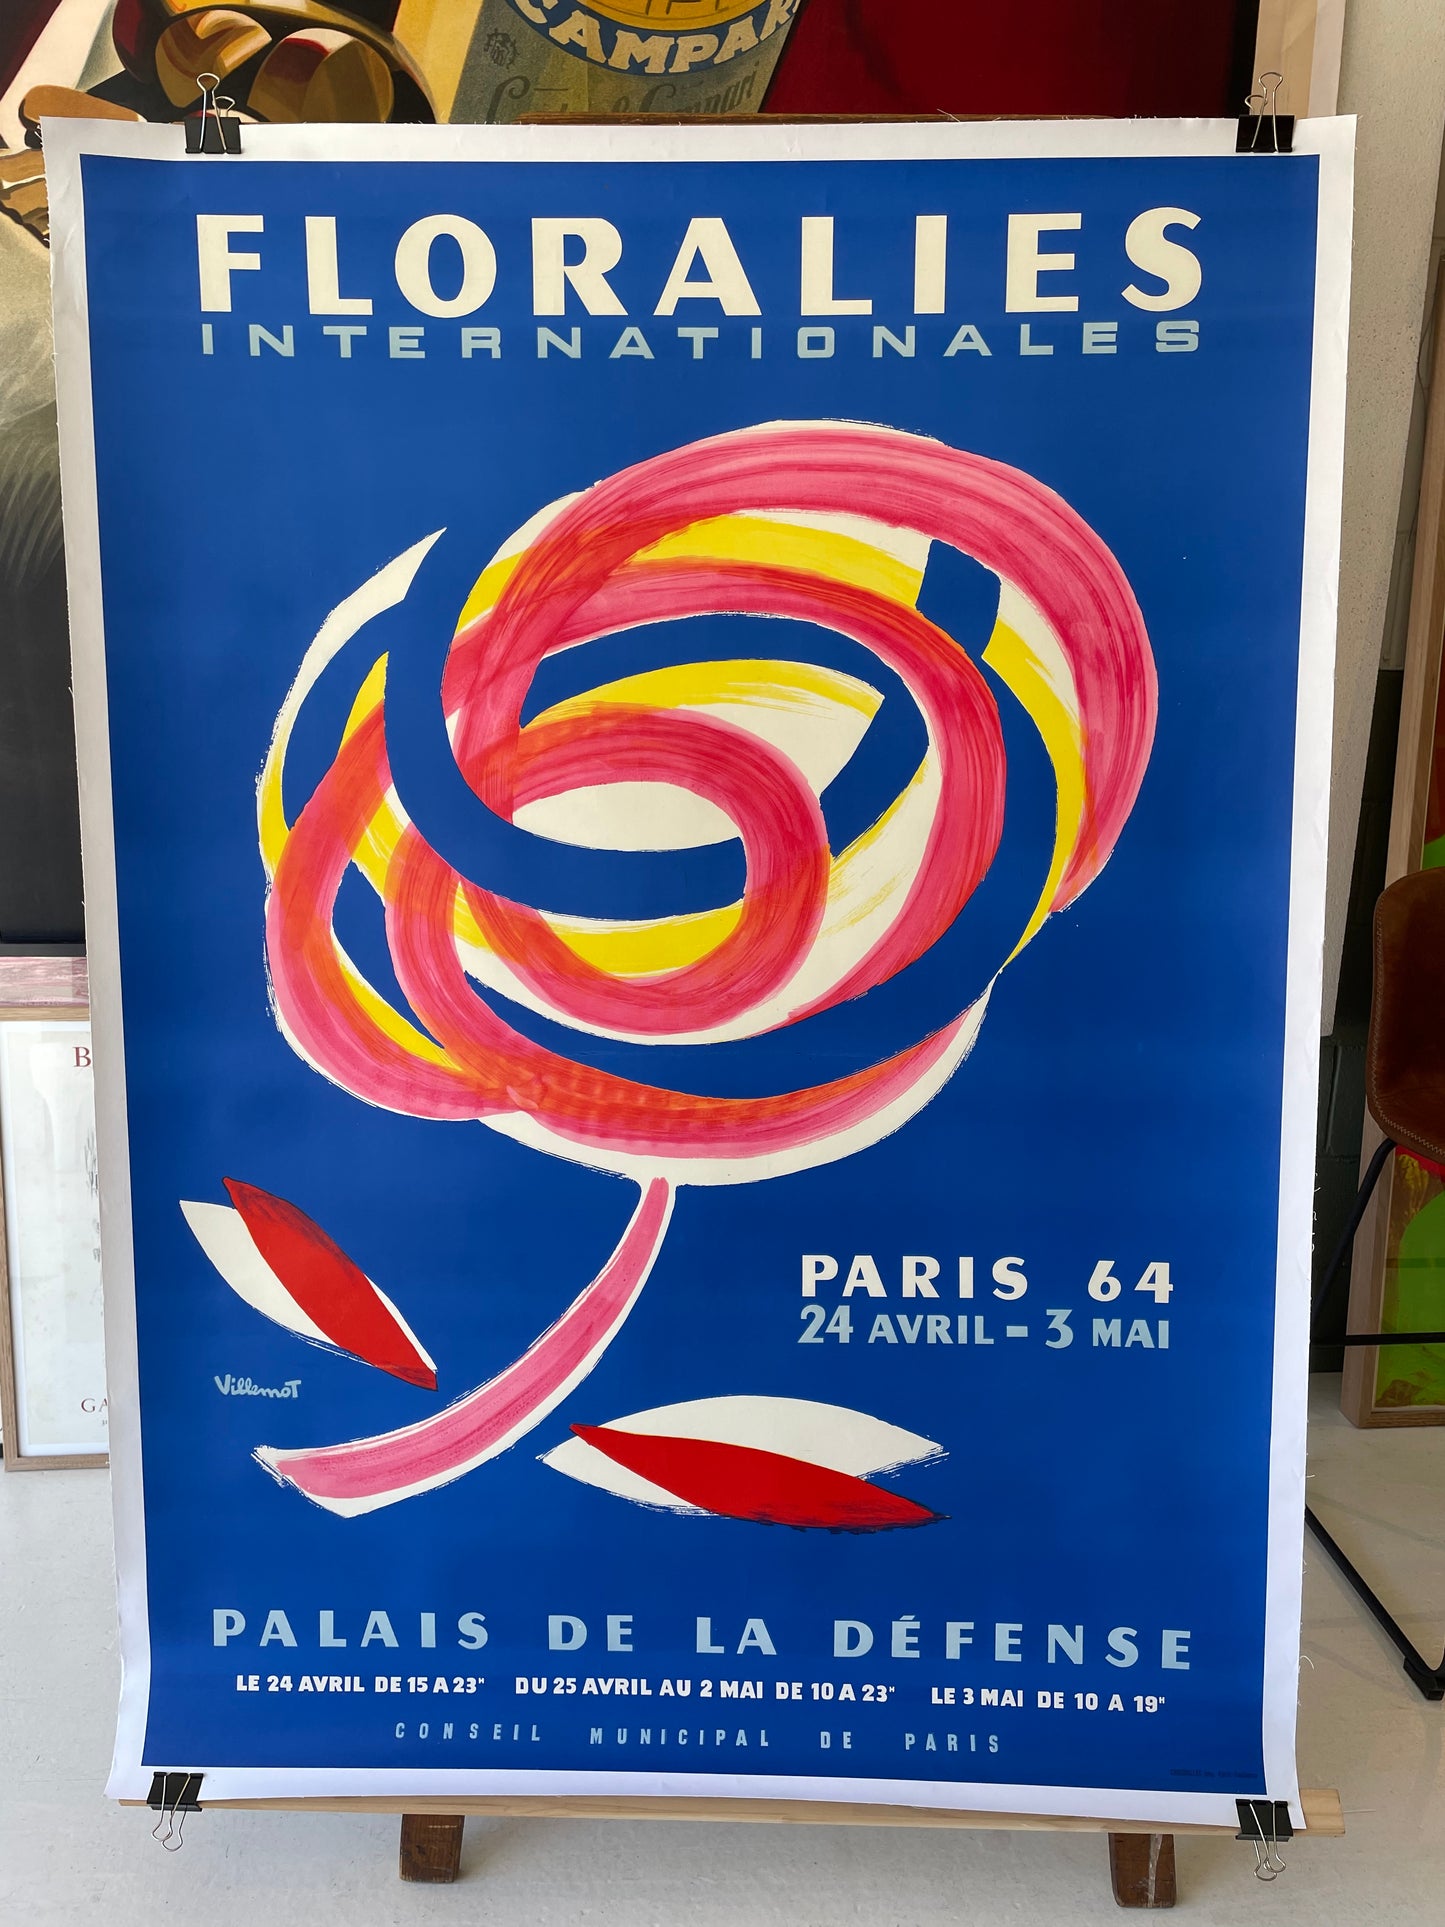 Floralies Internationales by Villemot